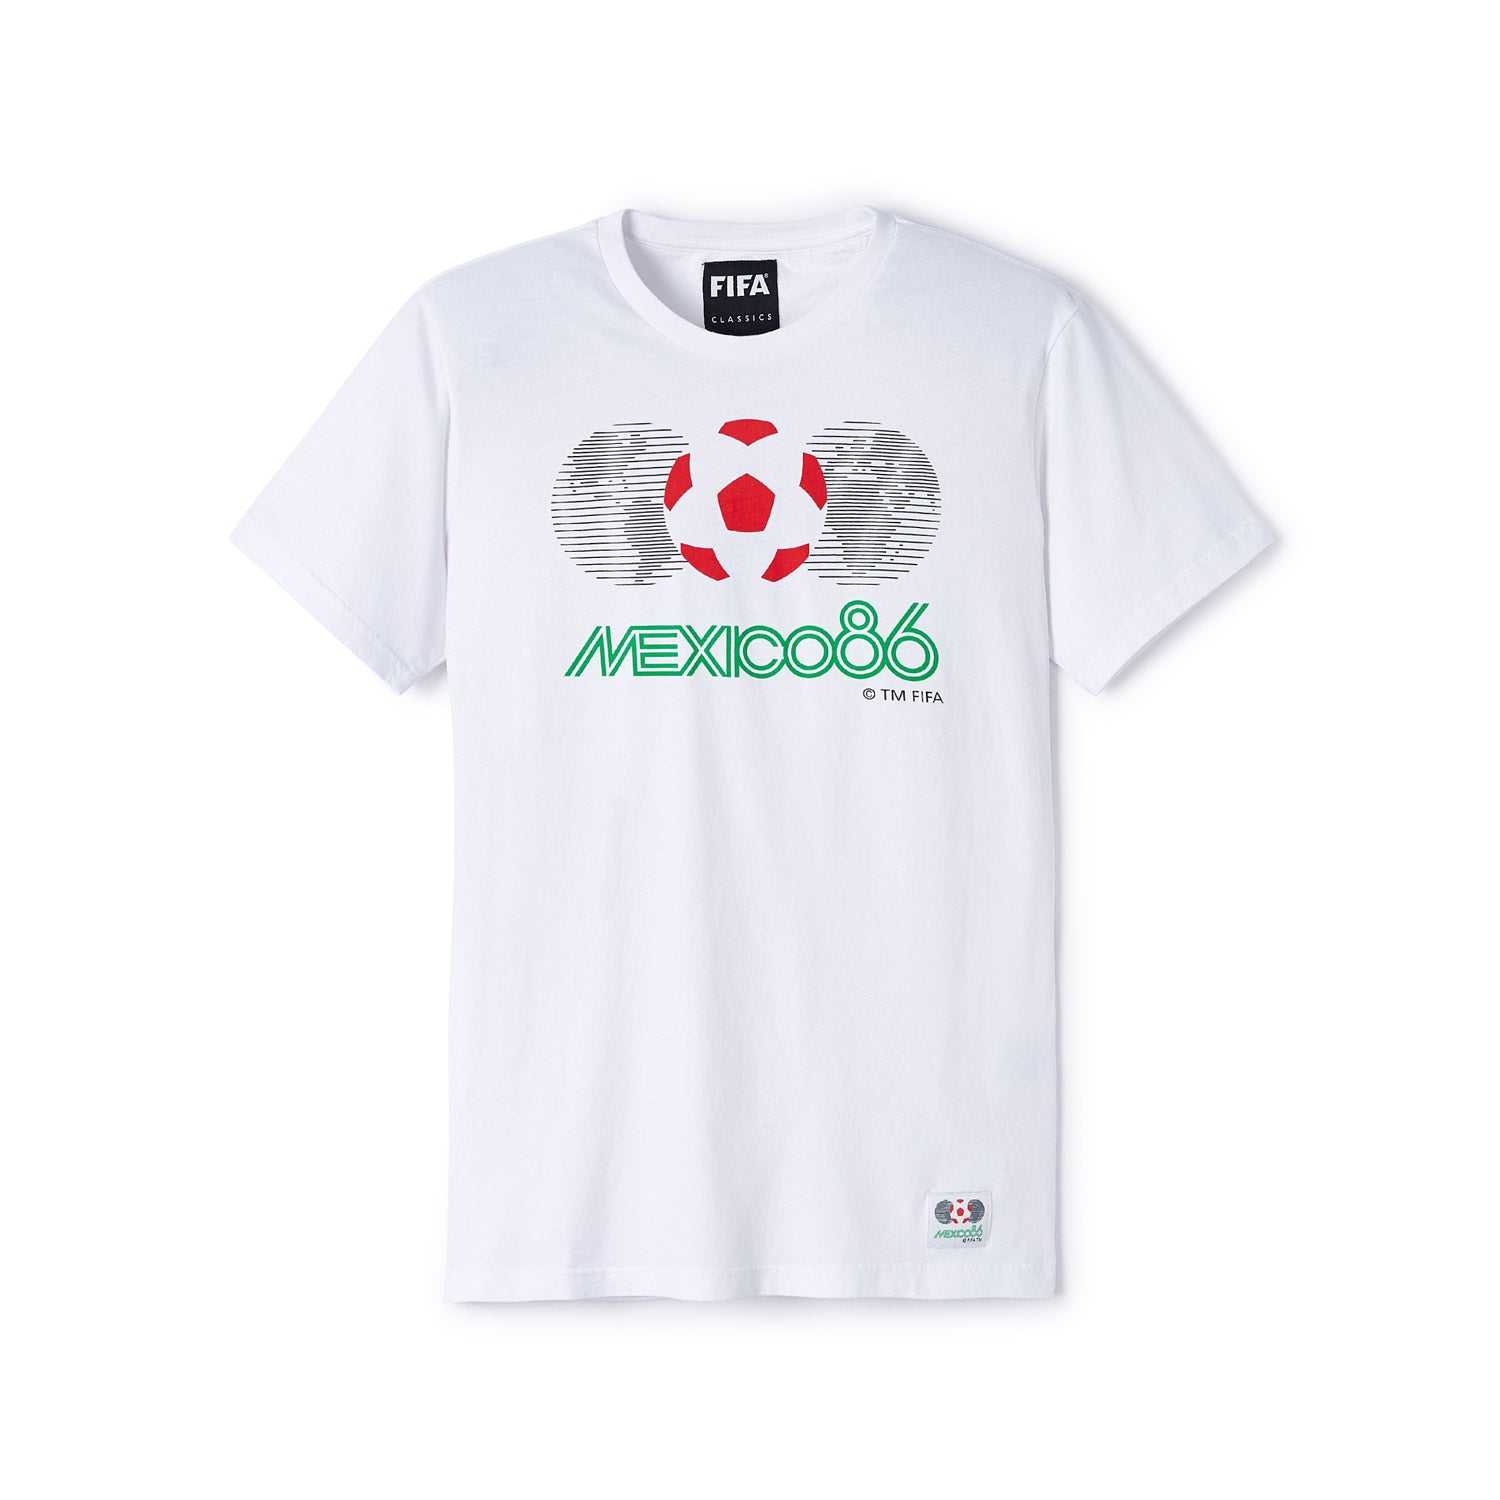 FIFA Rewind 1986 World Cup Emblem T-Shirt - Men's